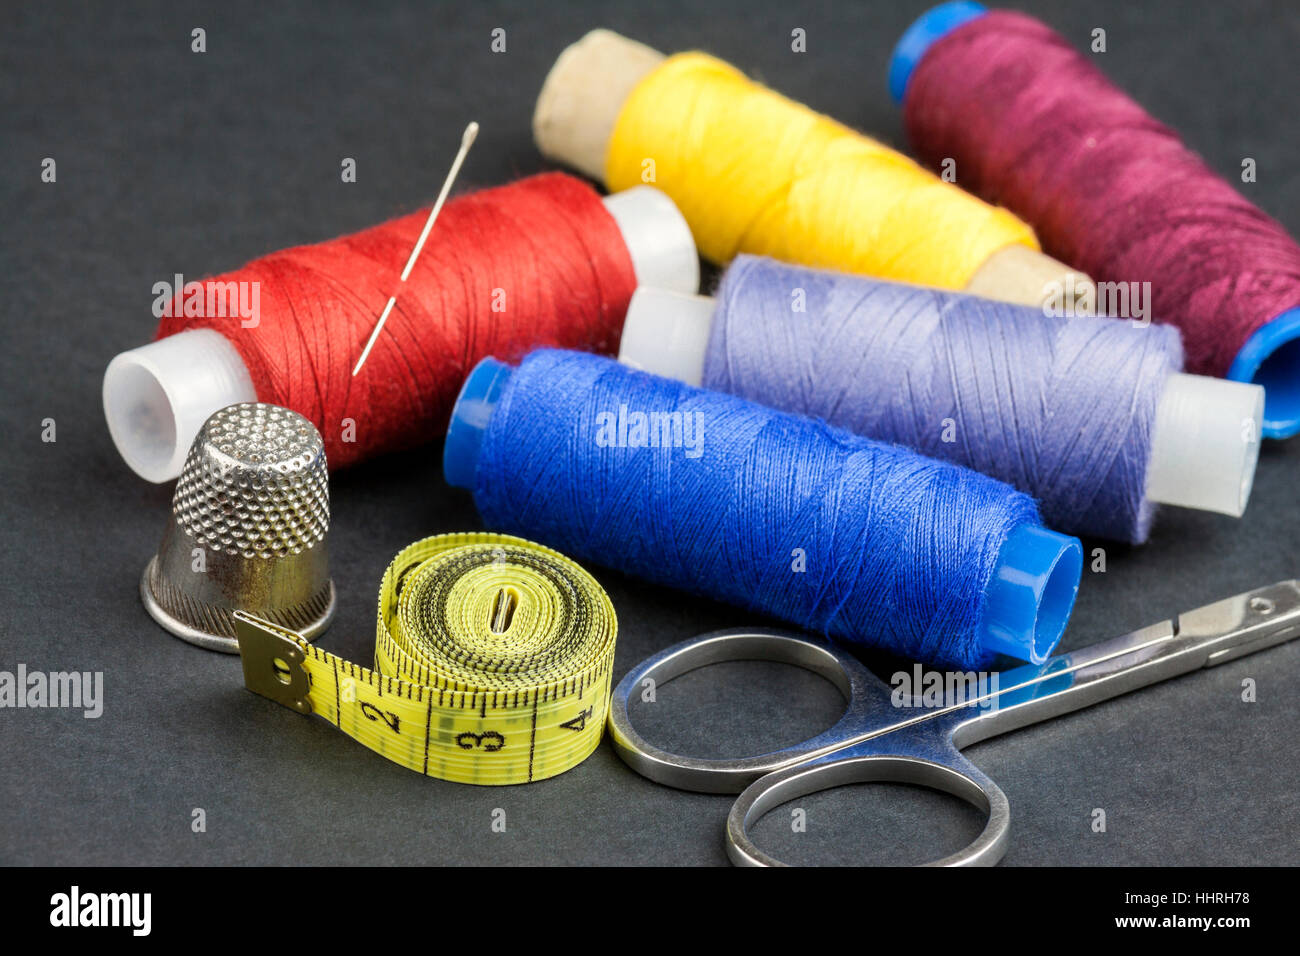 41,521 Needle Black Thread Images, Stock Photos, 3D objects, & Vectors